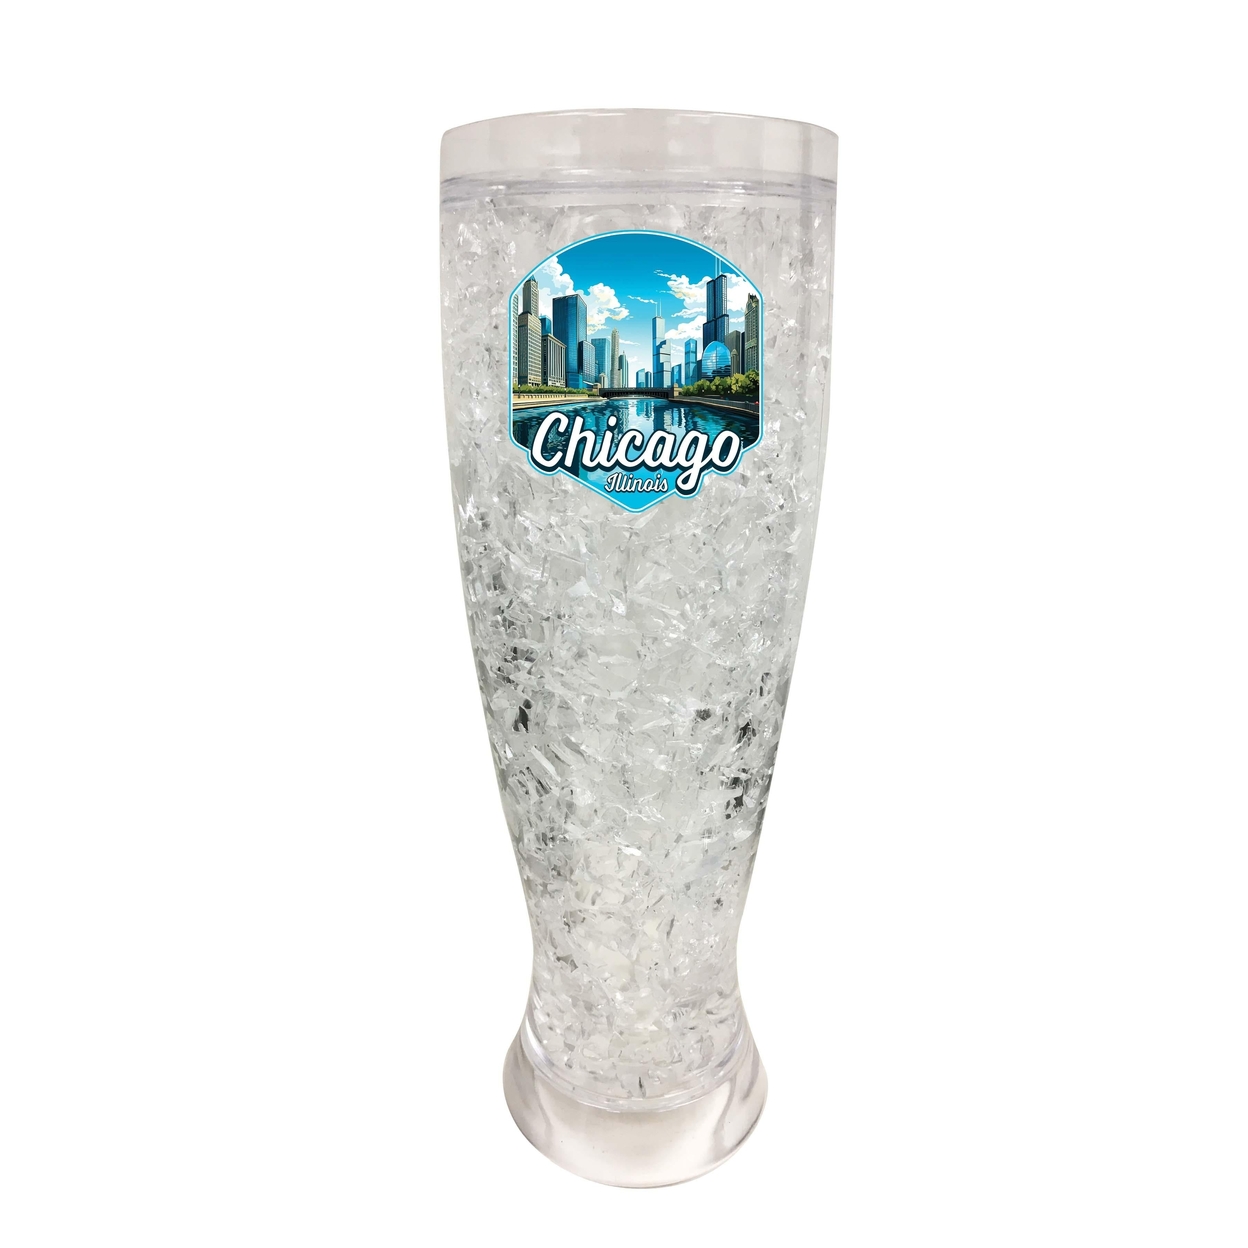 Chicago Illinois A Souvenir 16oz Broken Glass Frosty Mug - Single